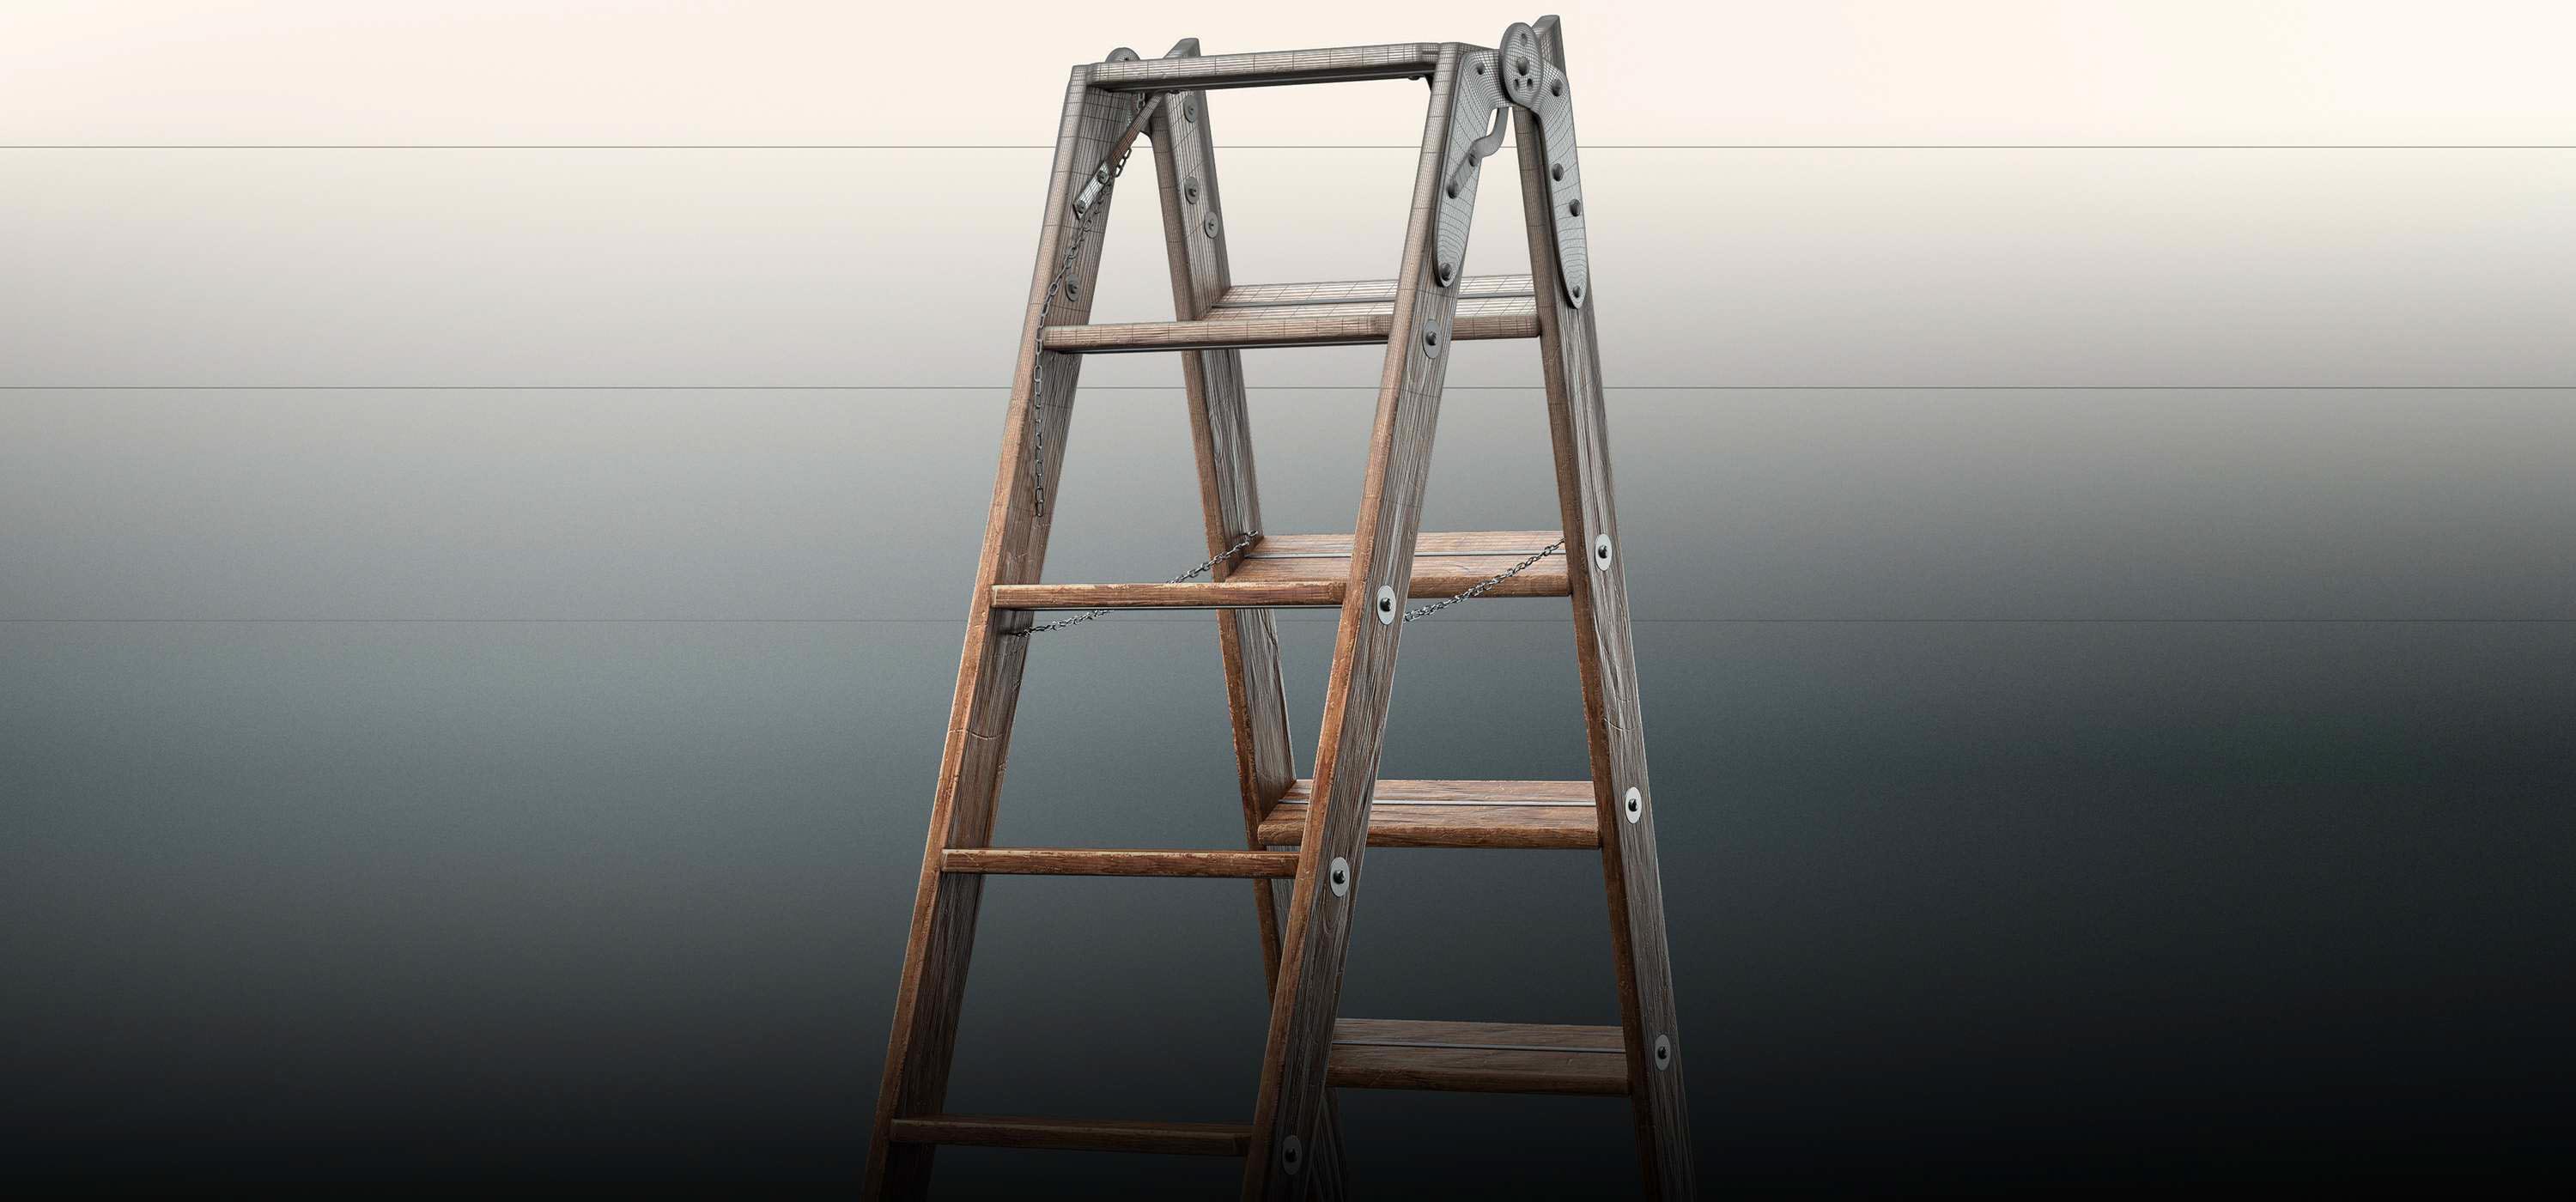 Wooden Ladder 3D Model | C4D FBX OBJ CGI Asset PRO EDU cinema 4d cgi assets for photographers